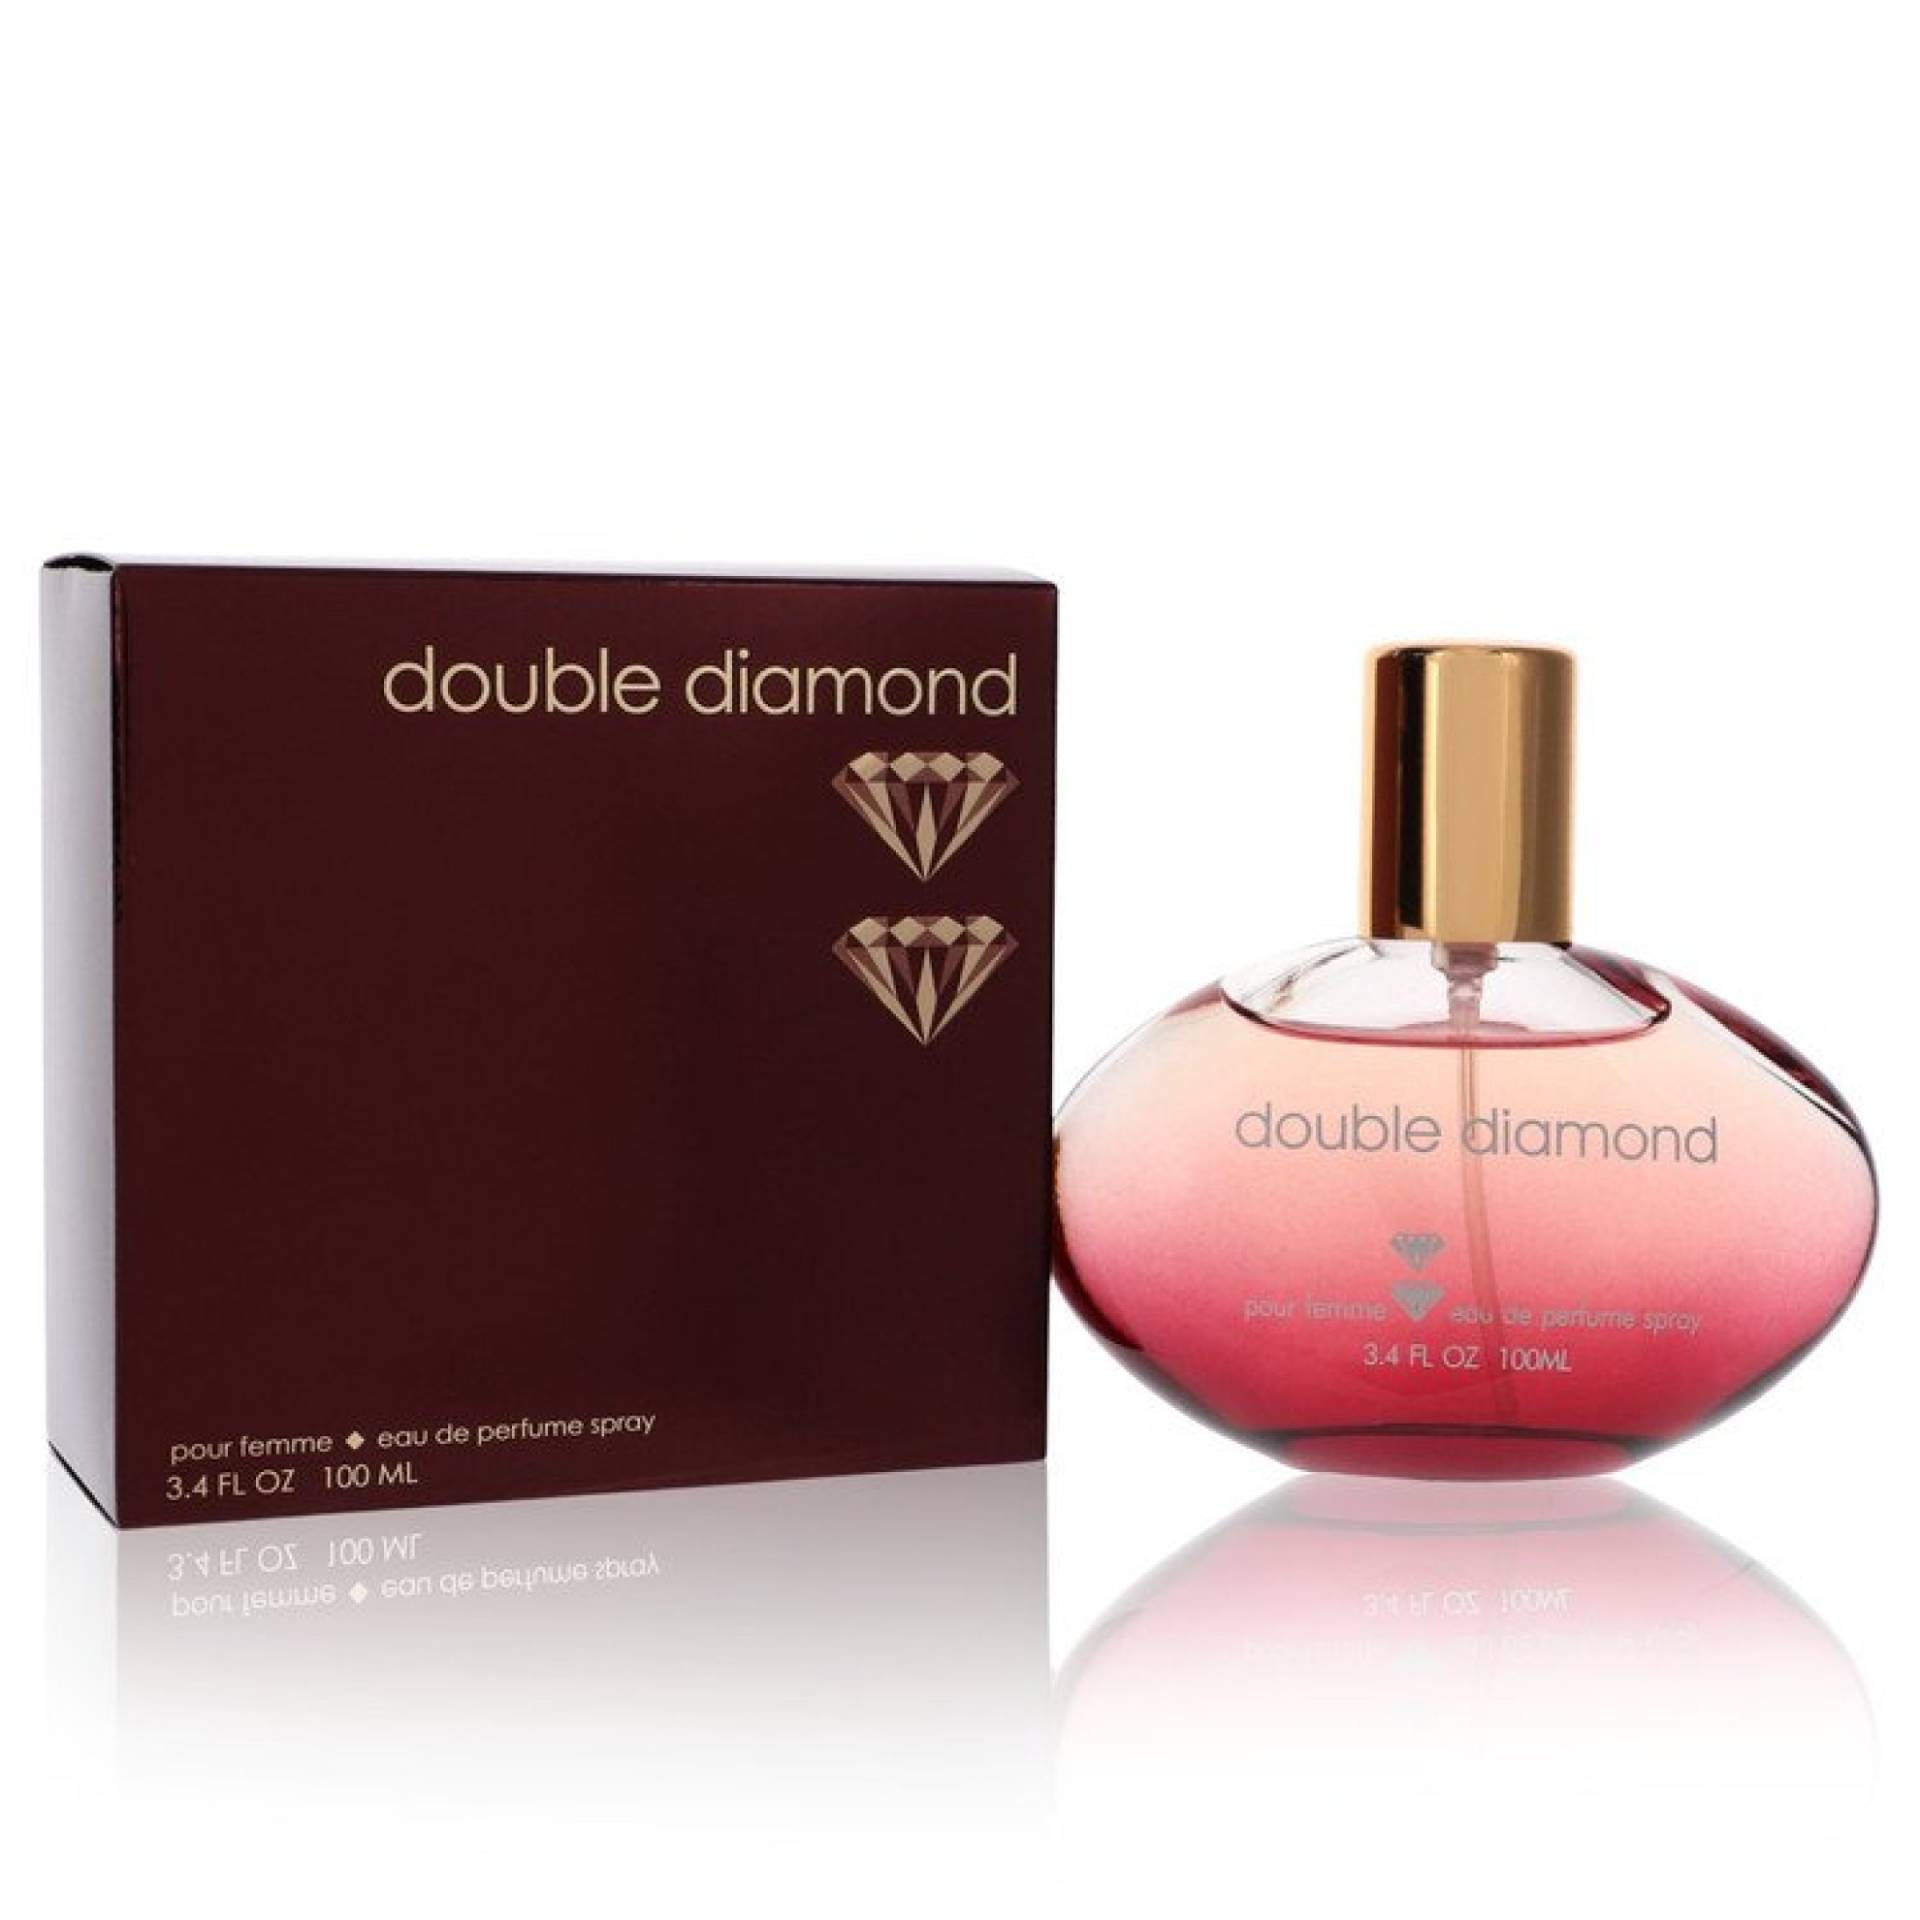 Yzy Perfume Double Diamond Eau De Parfum Spray 100 ml von Yzy Perfume